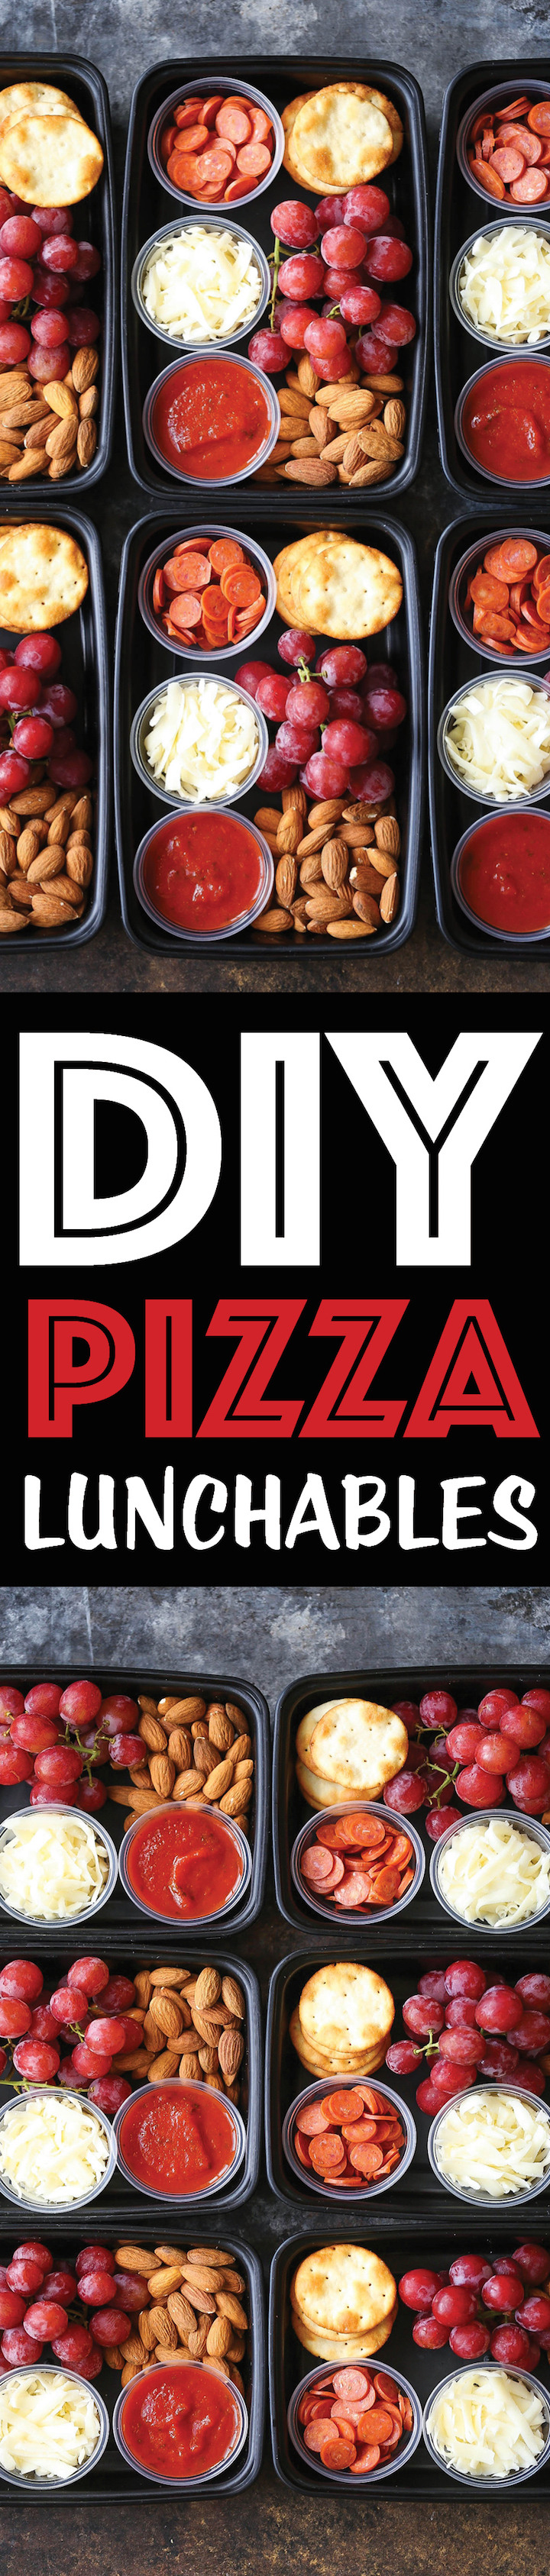 https://s23209.pcdn.co/wp-content/uploads/2017/02/DIY-Pizza-Lunchables.jpg